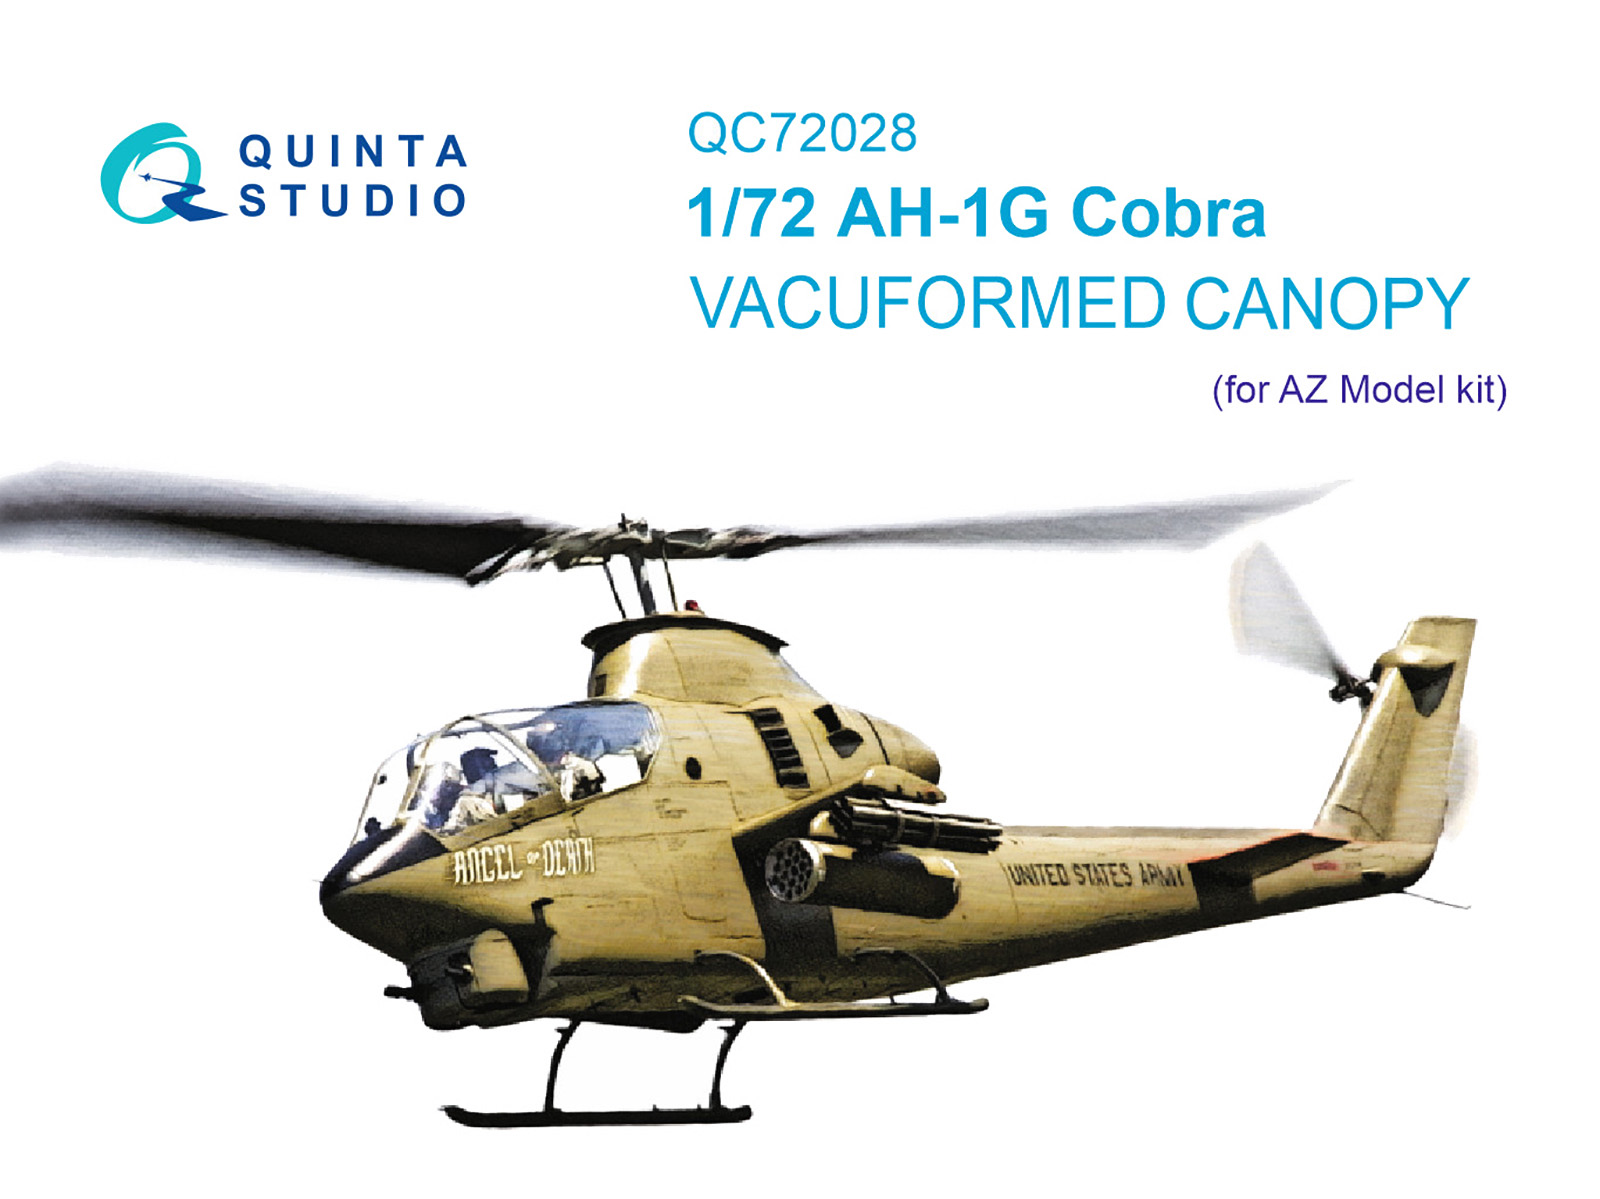 QC72028  дополнения из пластика  Набор остекления для модели AH-1G Cobra (AZ Model)  (1:72)